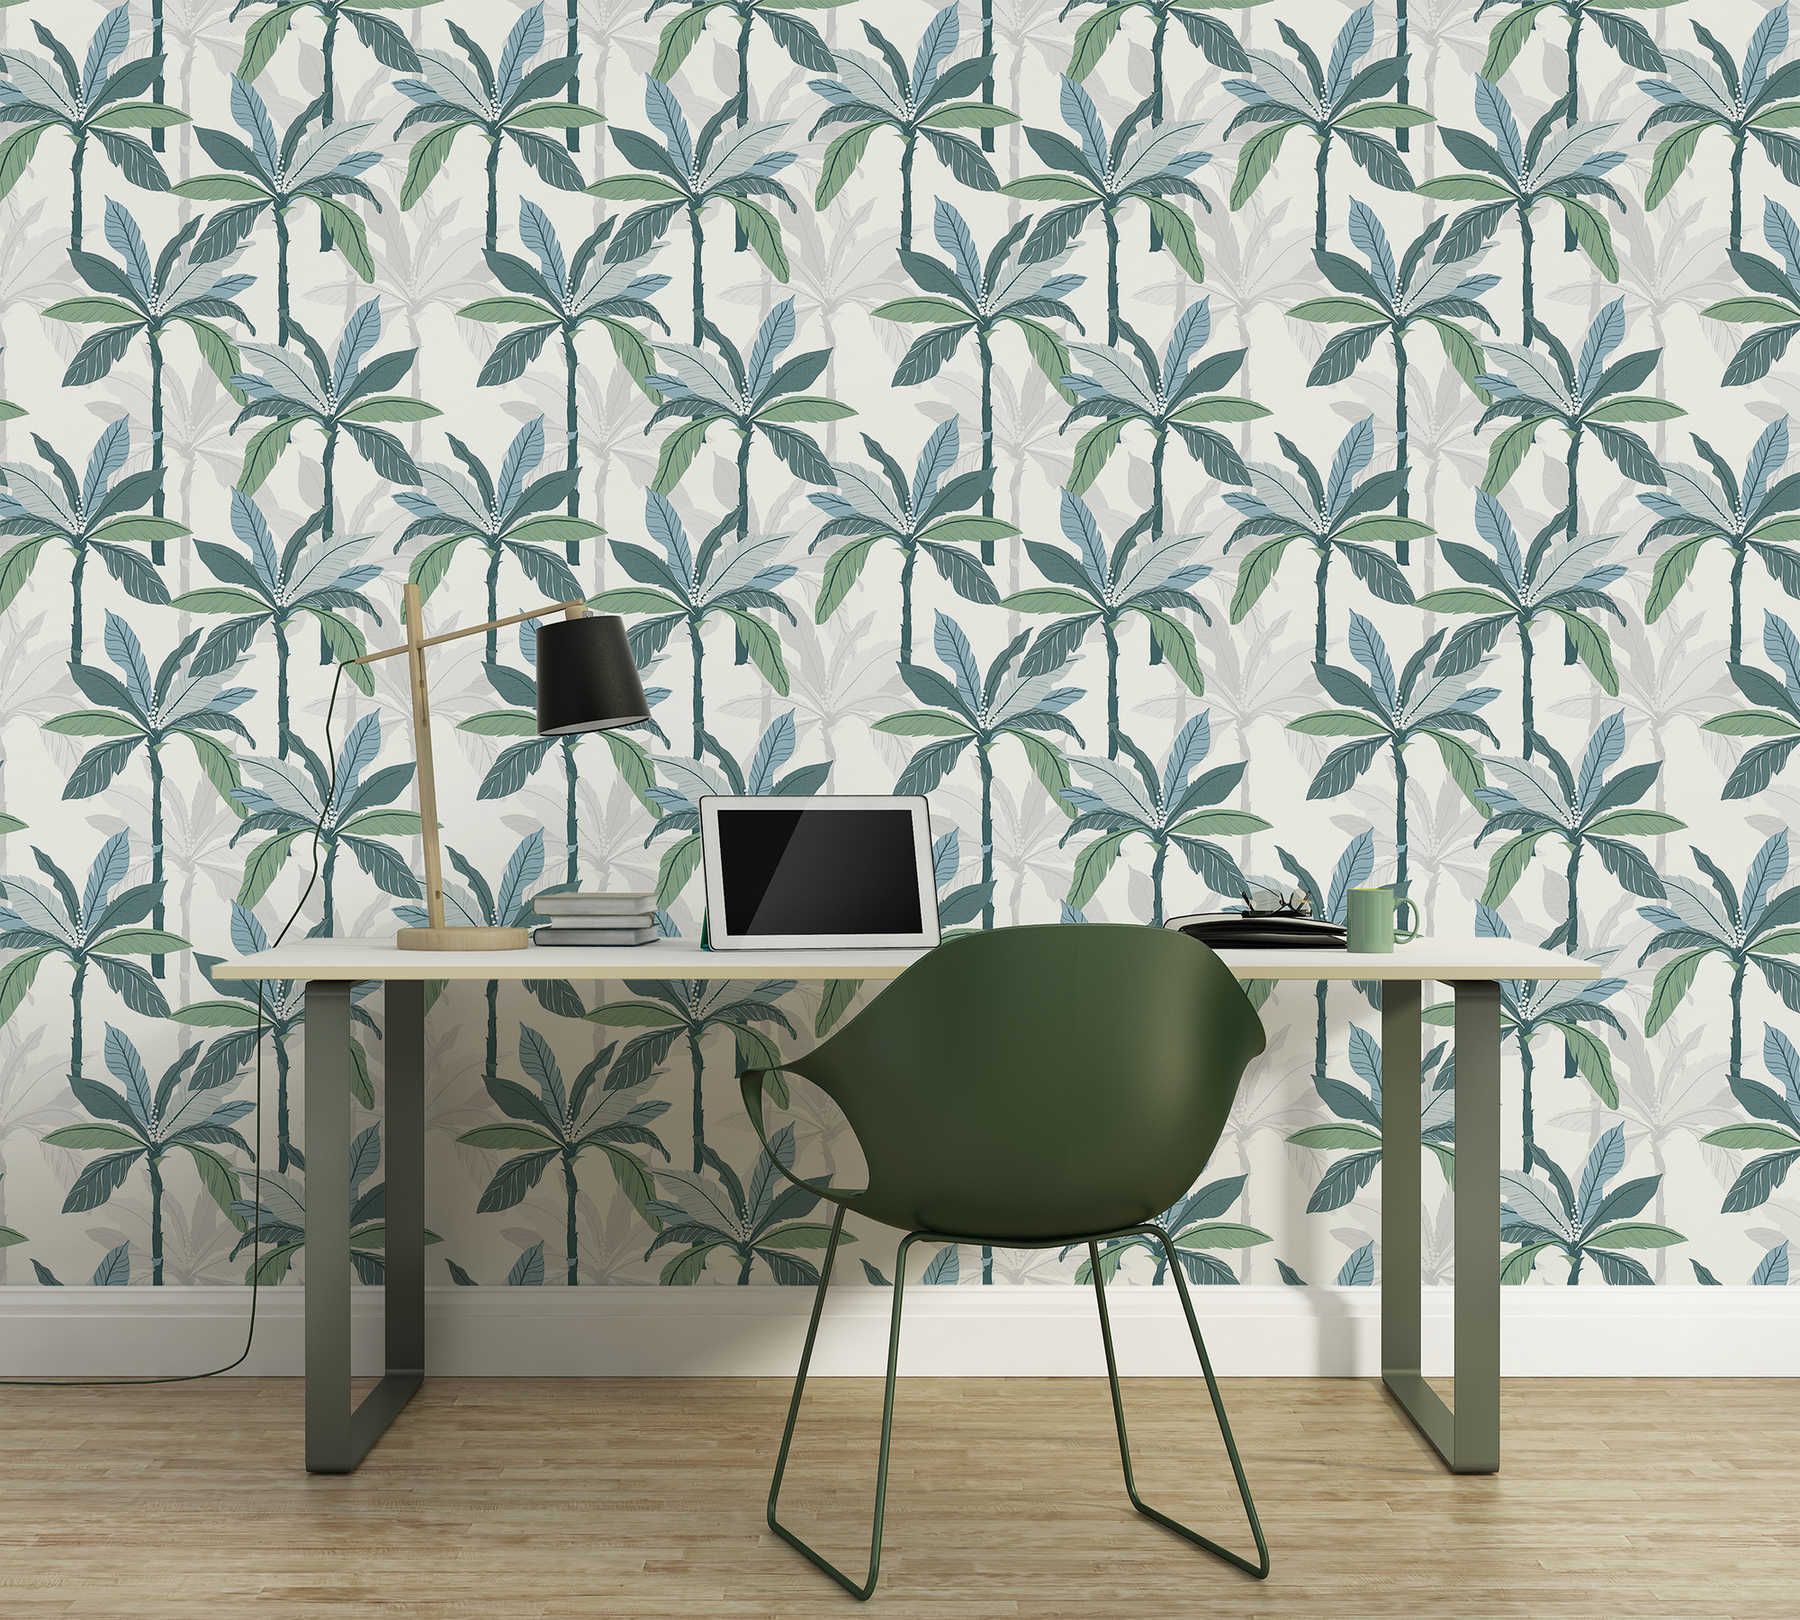             Tropics wallpaper with palm tree design - blue, green, white
        